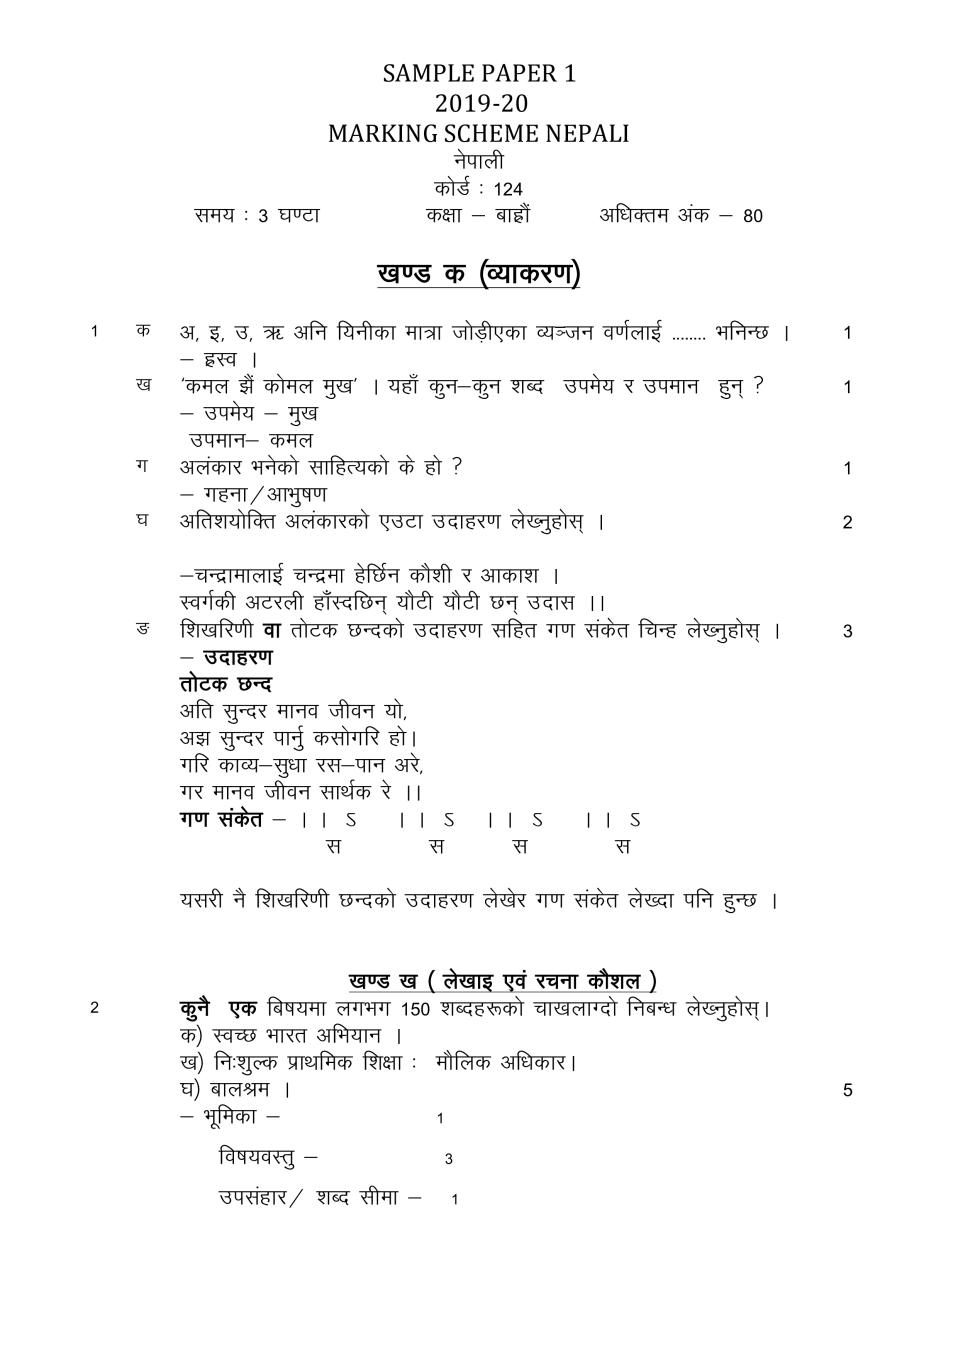 CBSE Class 12 Marking Scheme 2020 for Nepali - Page 1